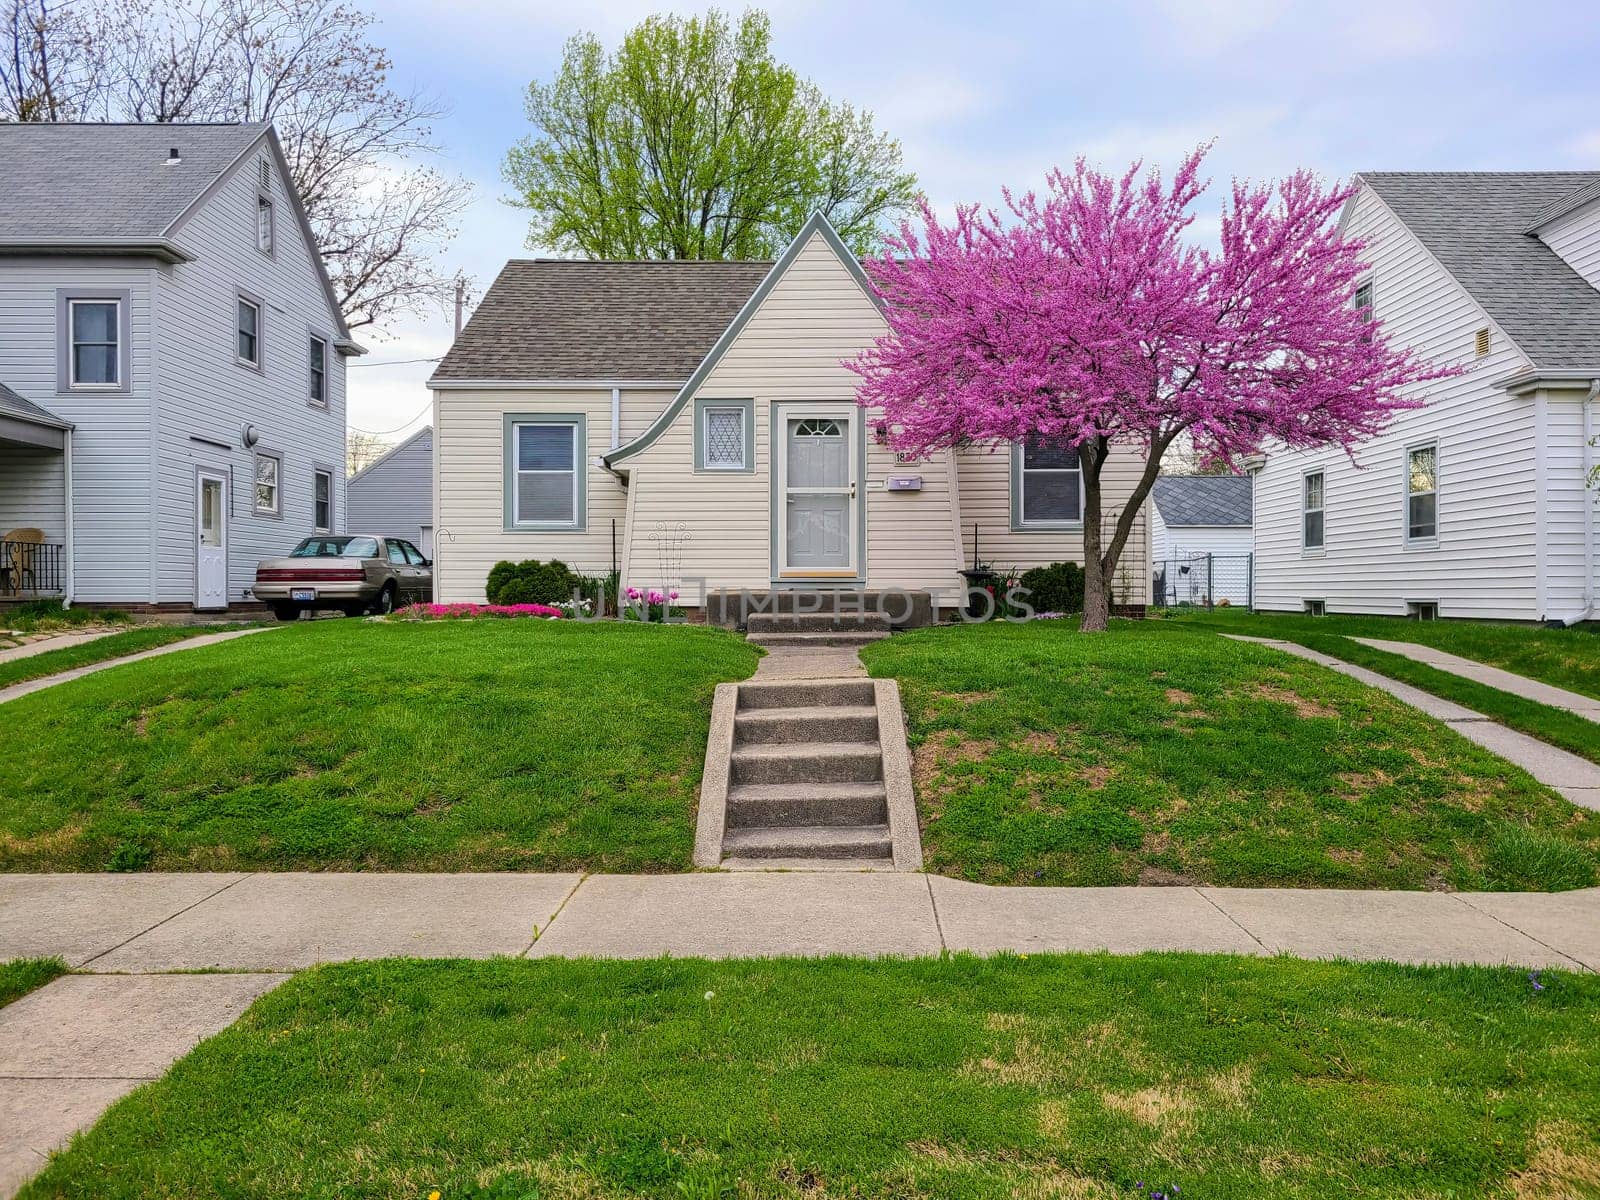 Vibrant purple tree blooms in a tranquil suburban neighborhood in Fort Wayne, enhancing a serene springtime scene.